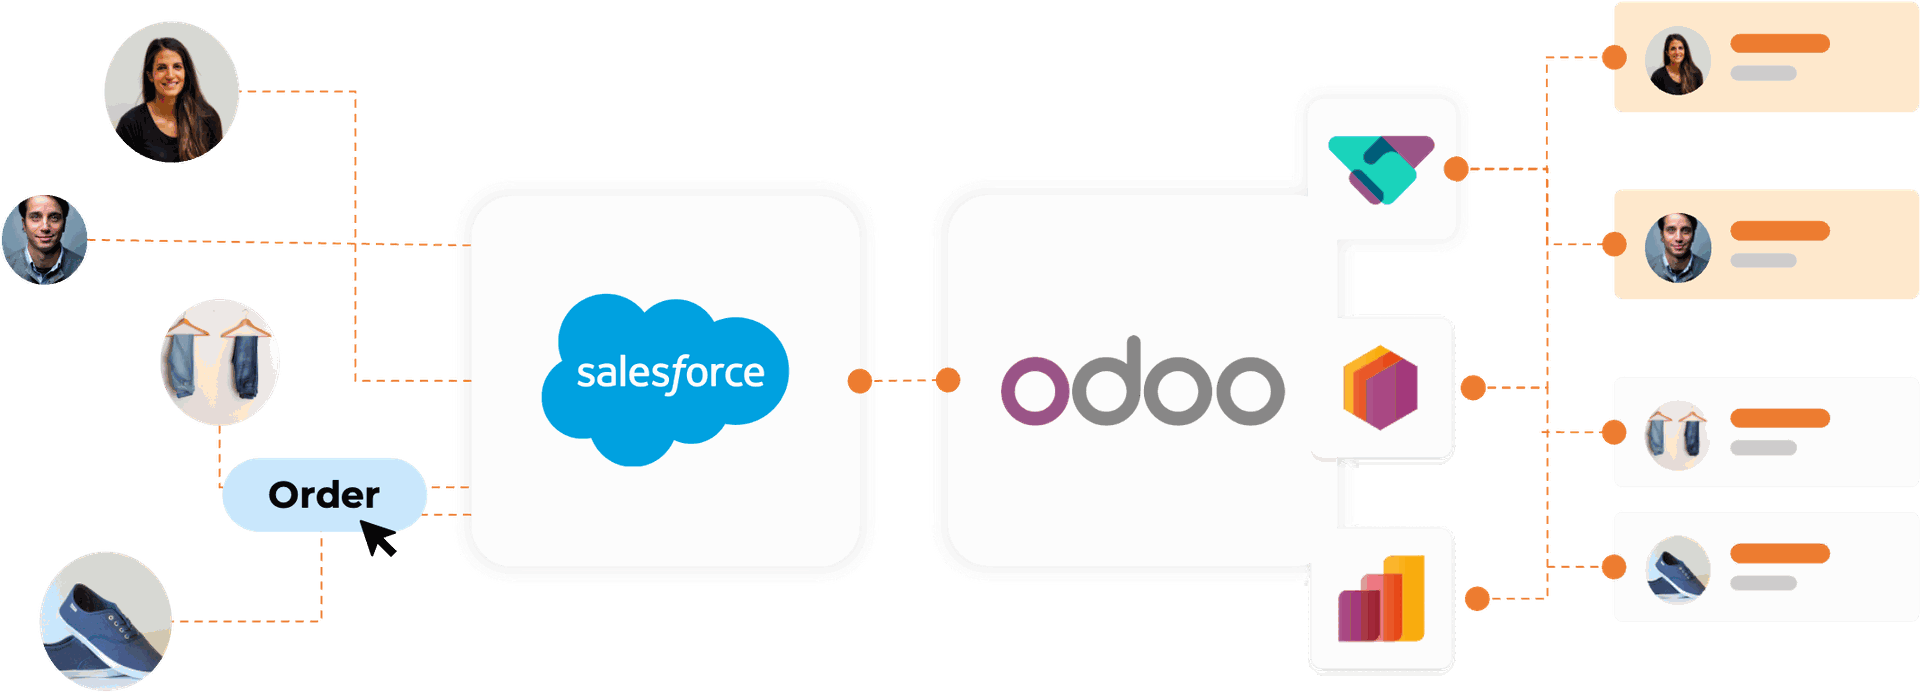 Odoo Salesforce Integration